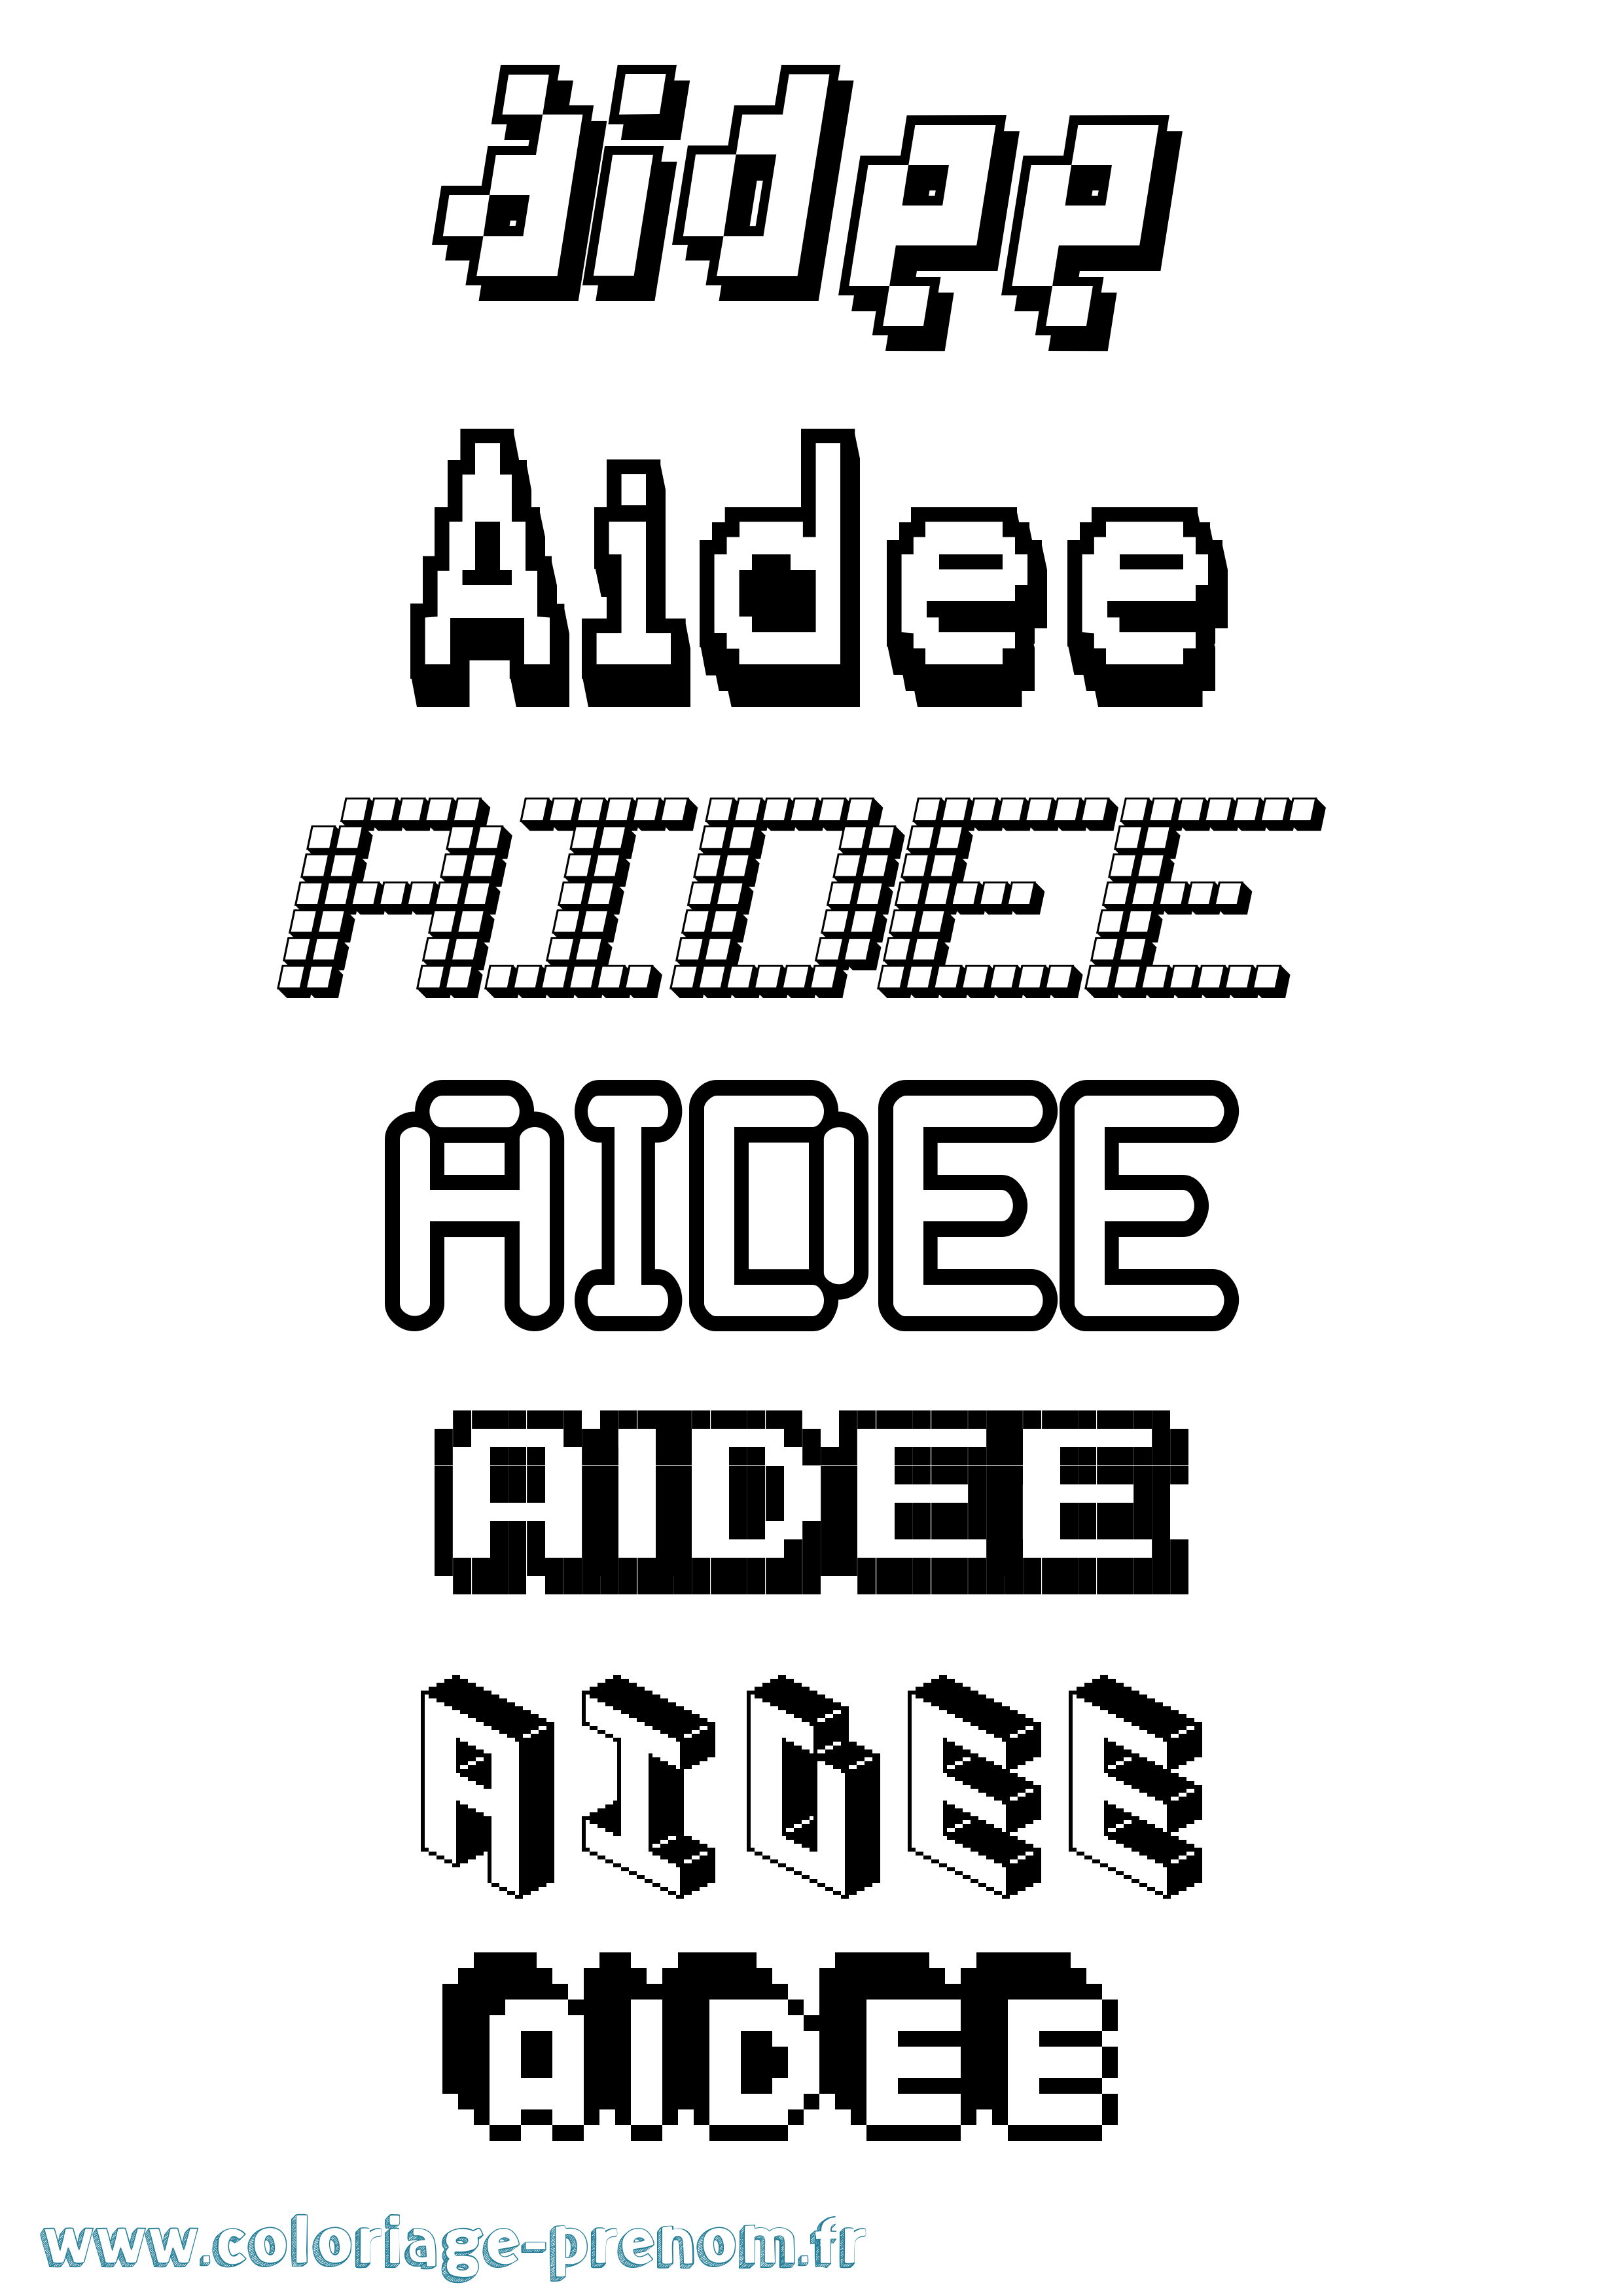 Coloriage prénom Aidee Pixel